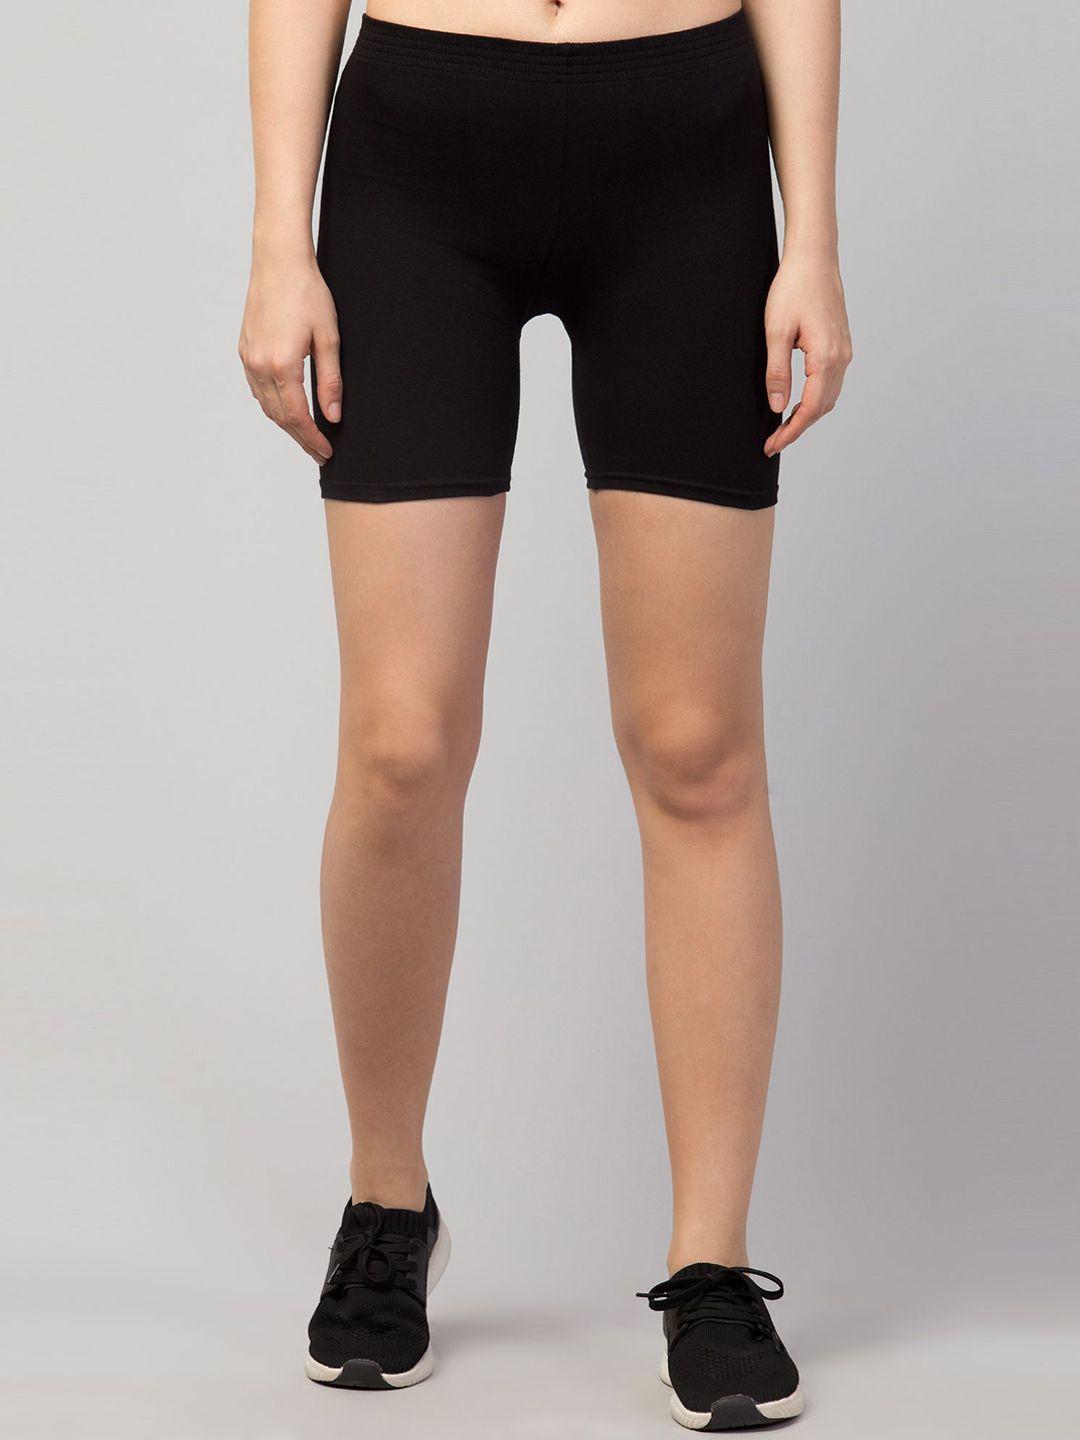 apraa-&-parma-women-black-slim-fit-cycling-sports-shorts